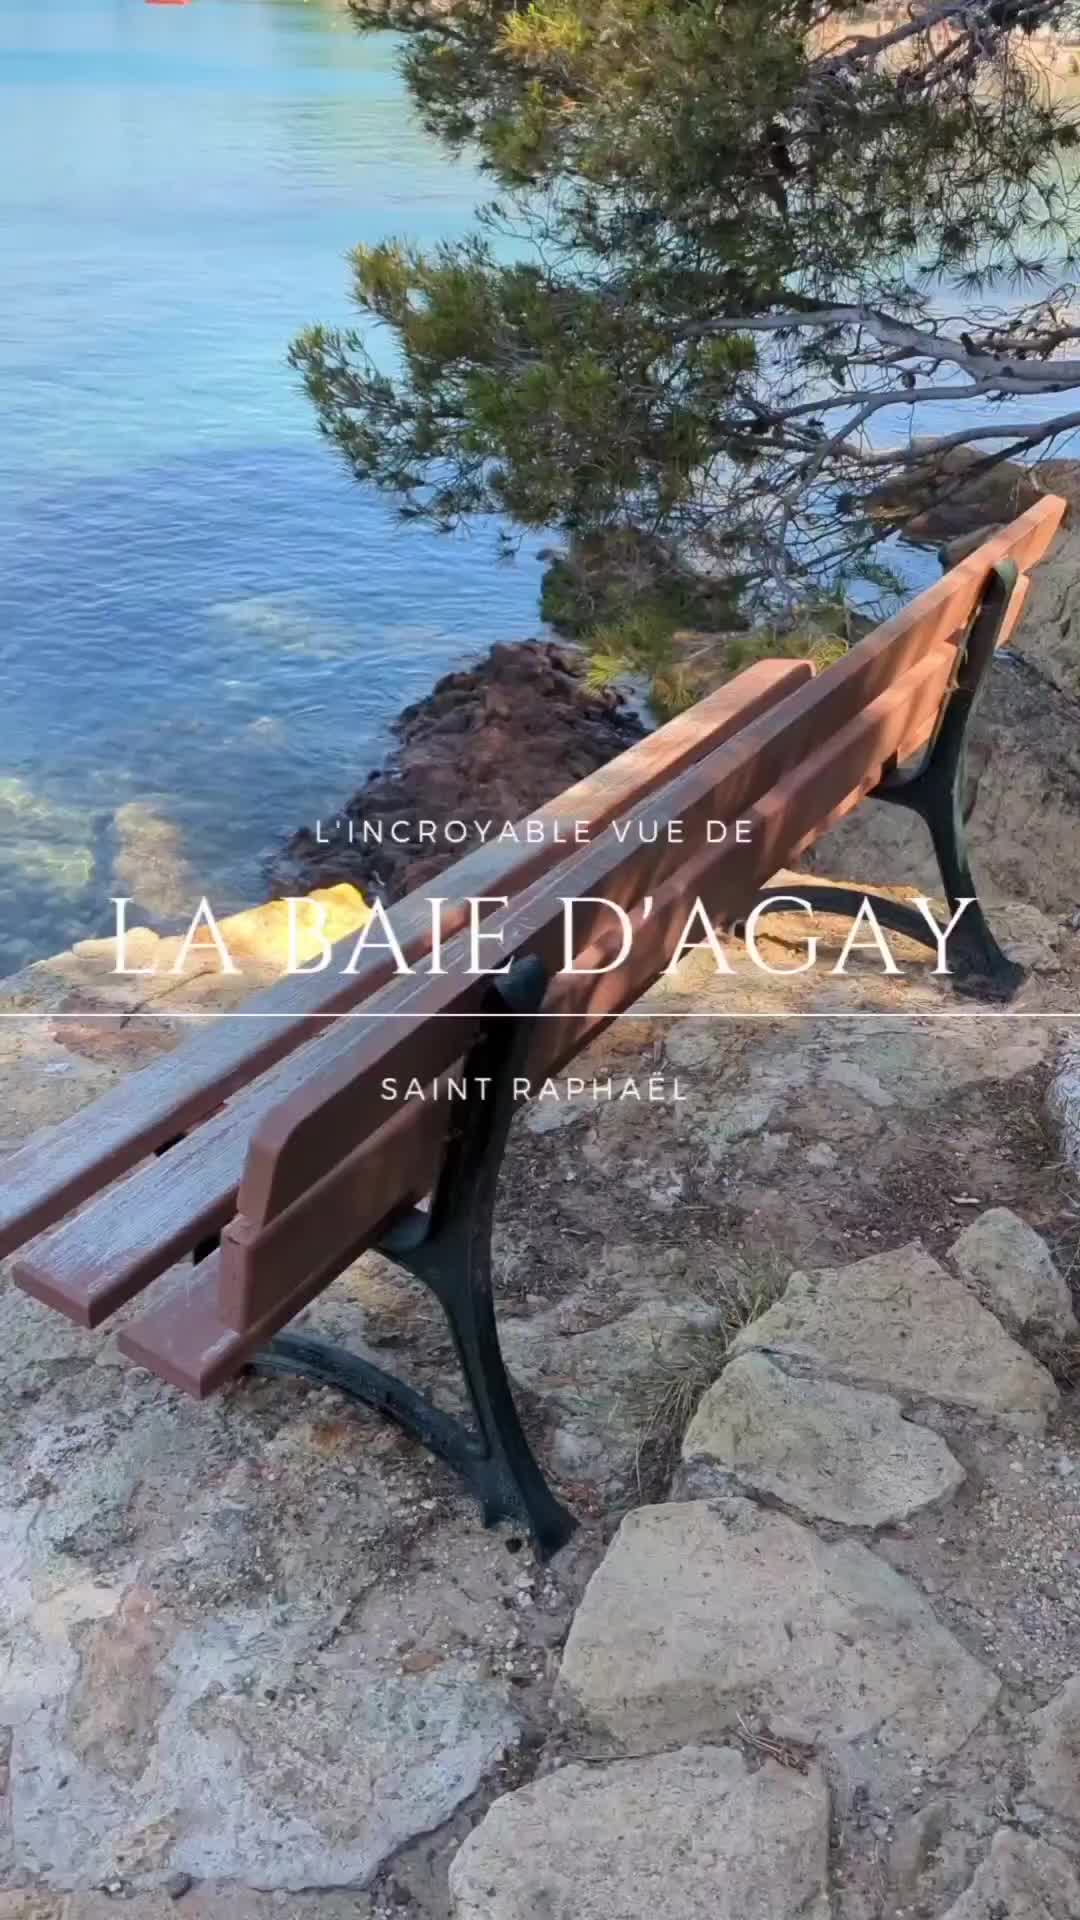 Discover the Beauty of Baie d'Agay in Saint-Raphaël